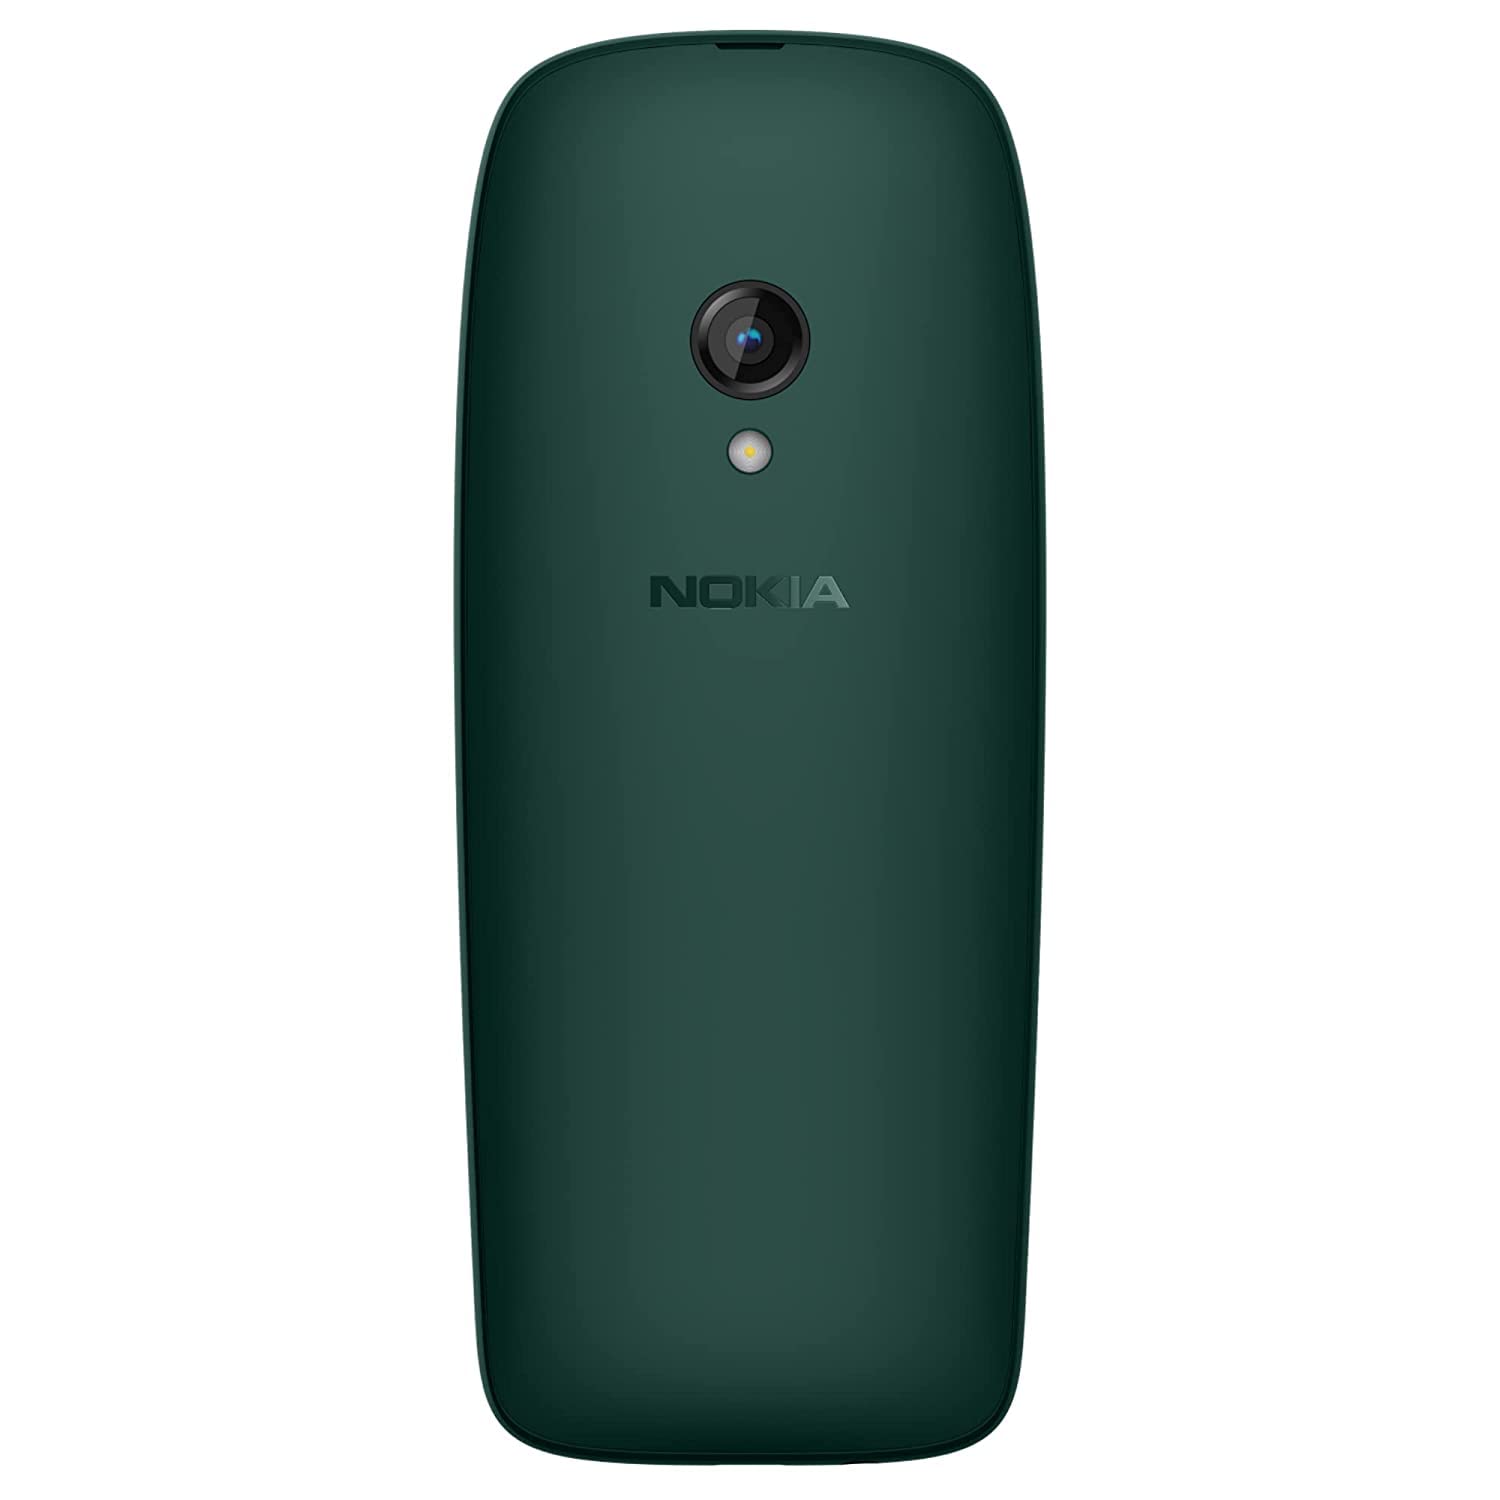 Nokia 6310 (2021) Dual-SIM 16MB ROM + 8MB RAM (GSM Only | No CDMA) Factory Unlocked 2G GSM Cell-Phone (Dark Green) - International Version